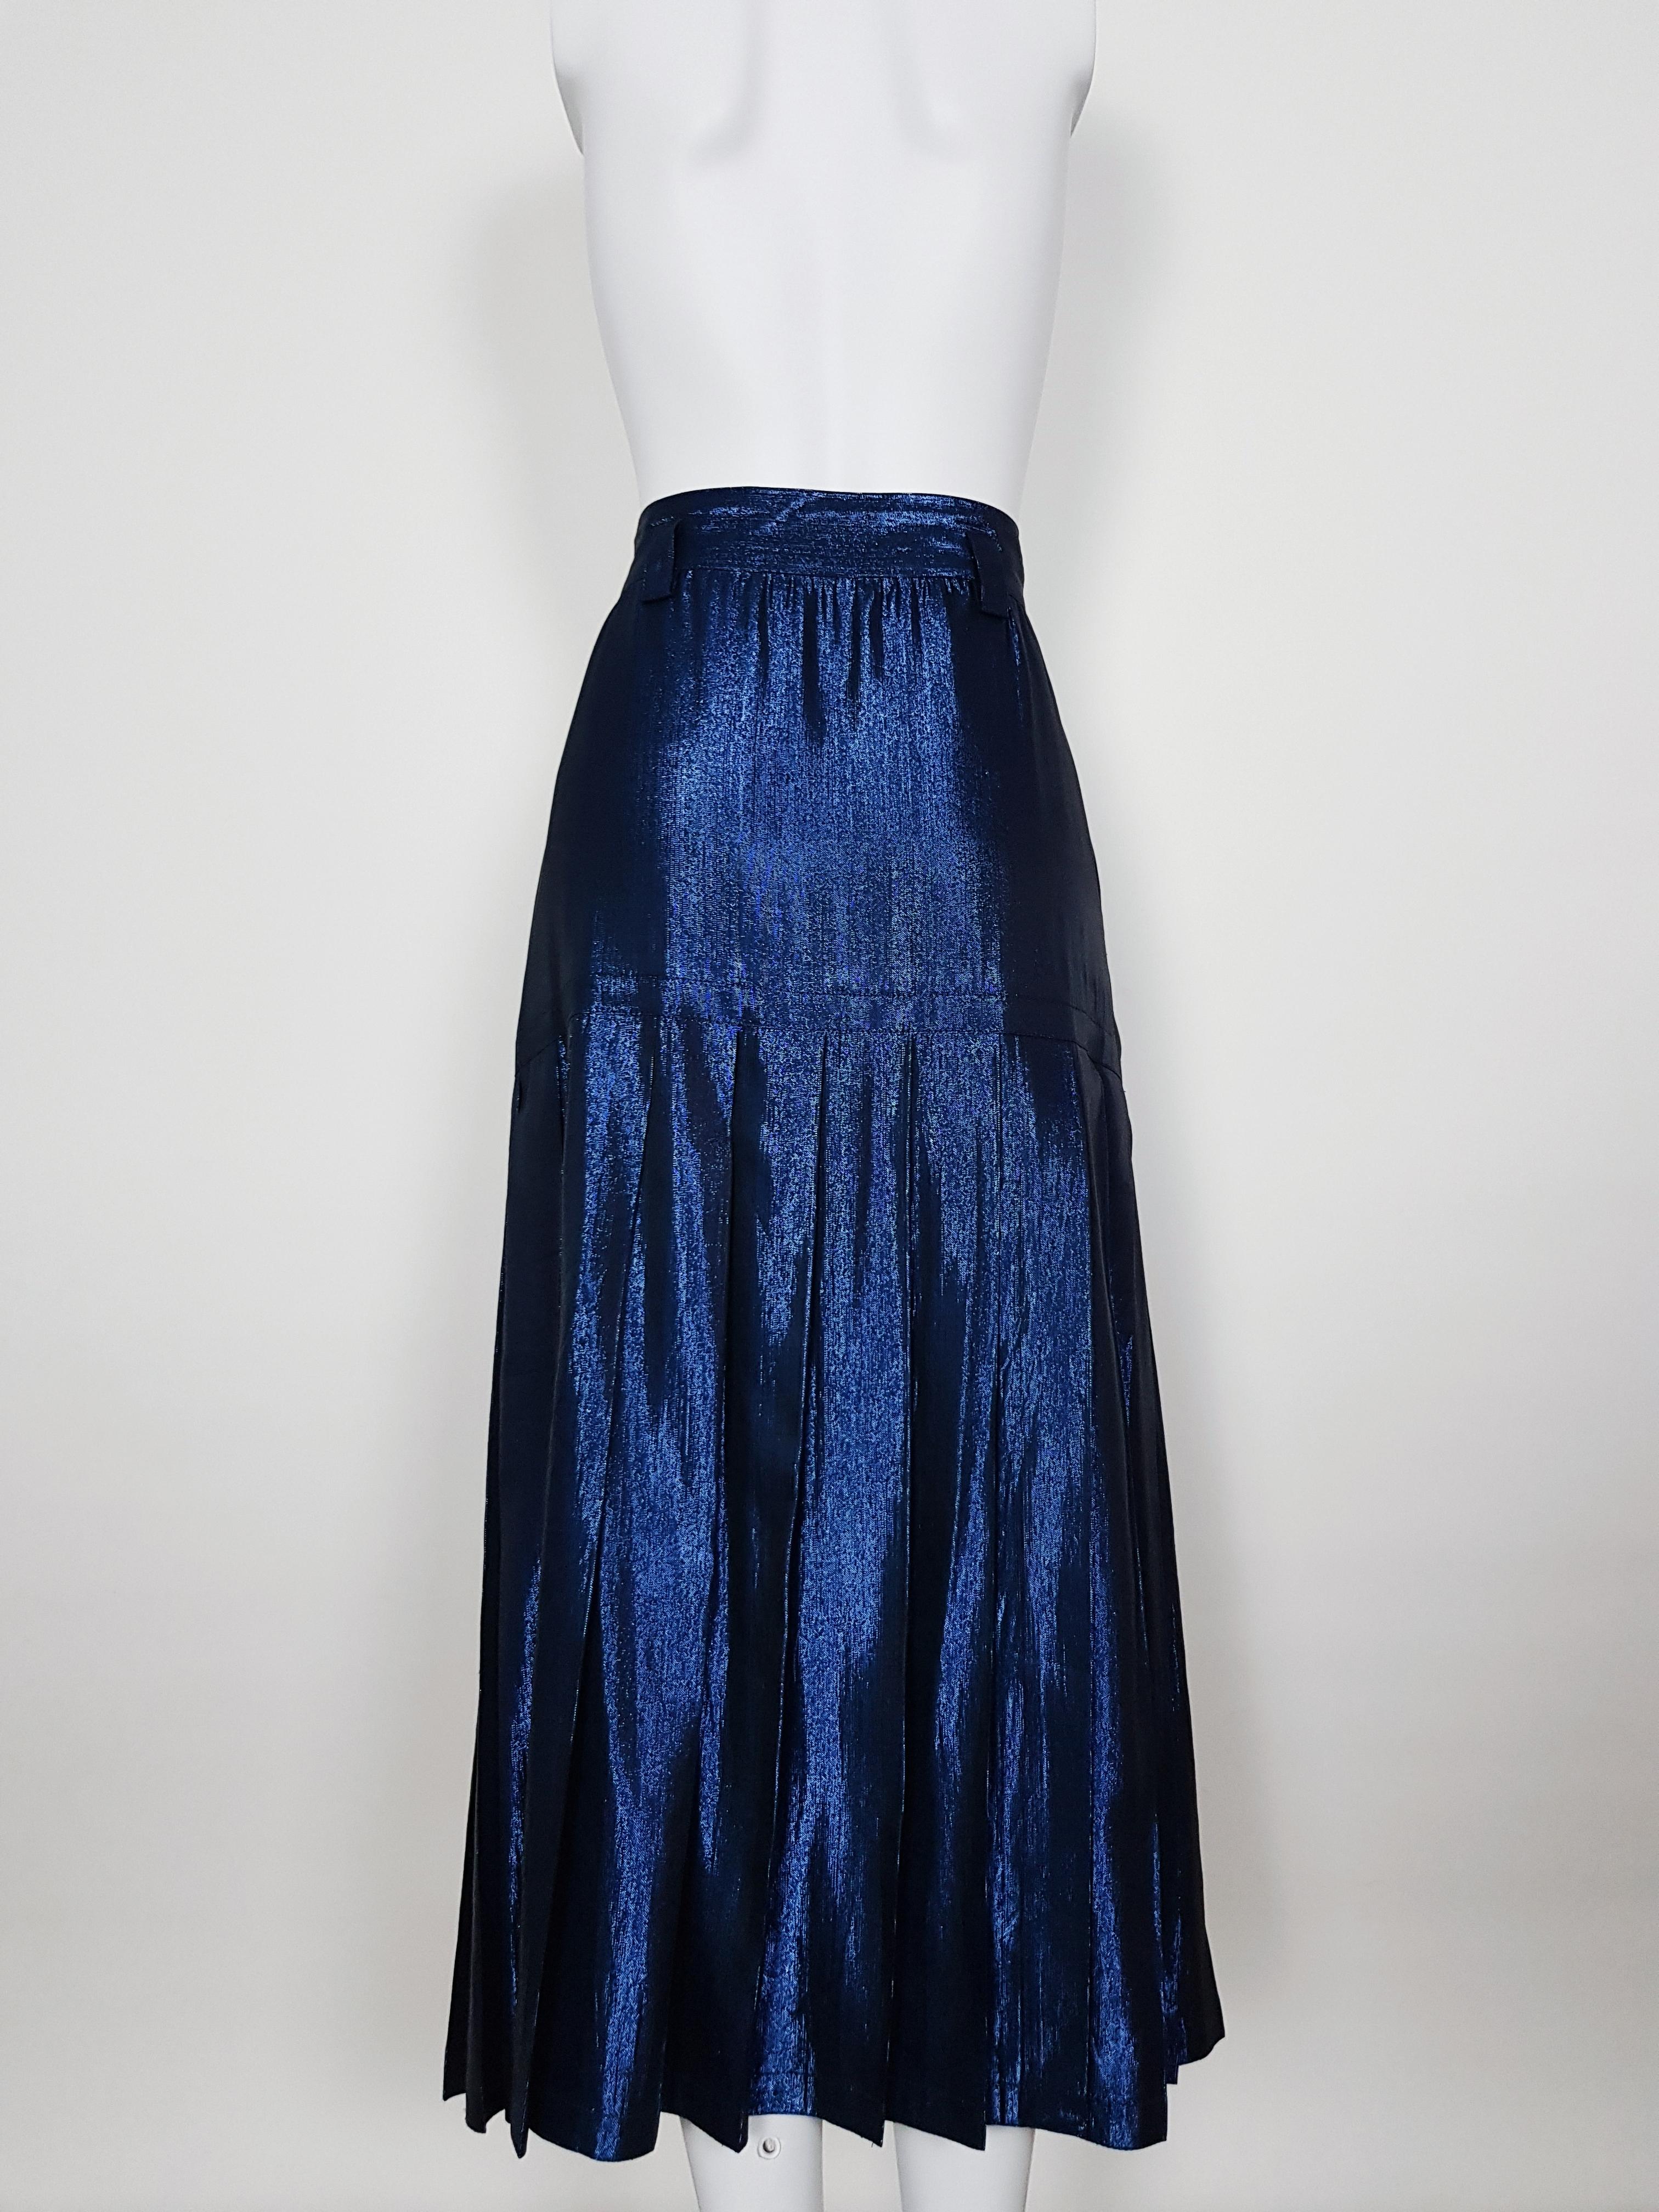 1980 GIANNI VERSACE lurex silk pleated Skirt In Good Condition For Sale In Genève, CH